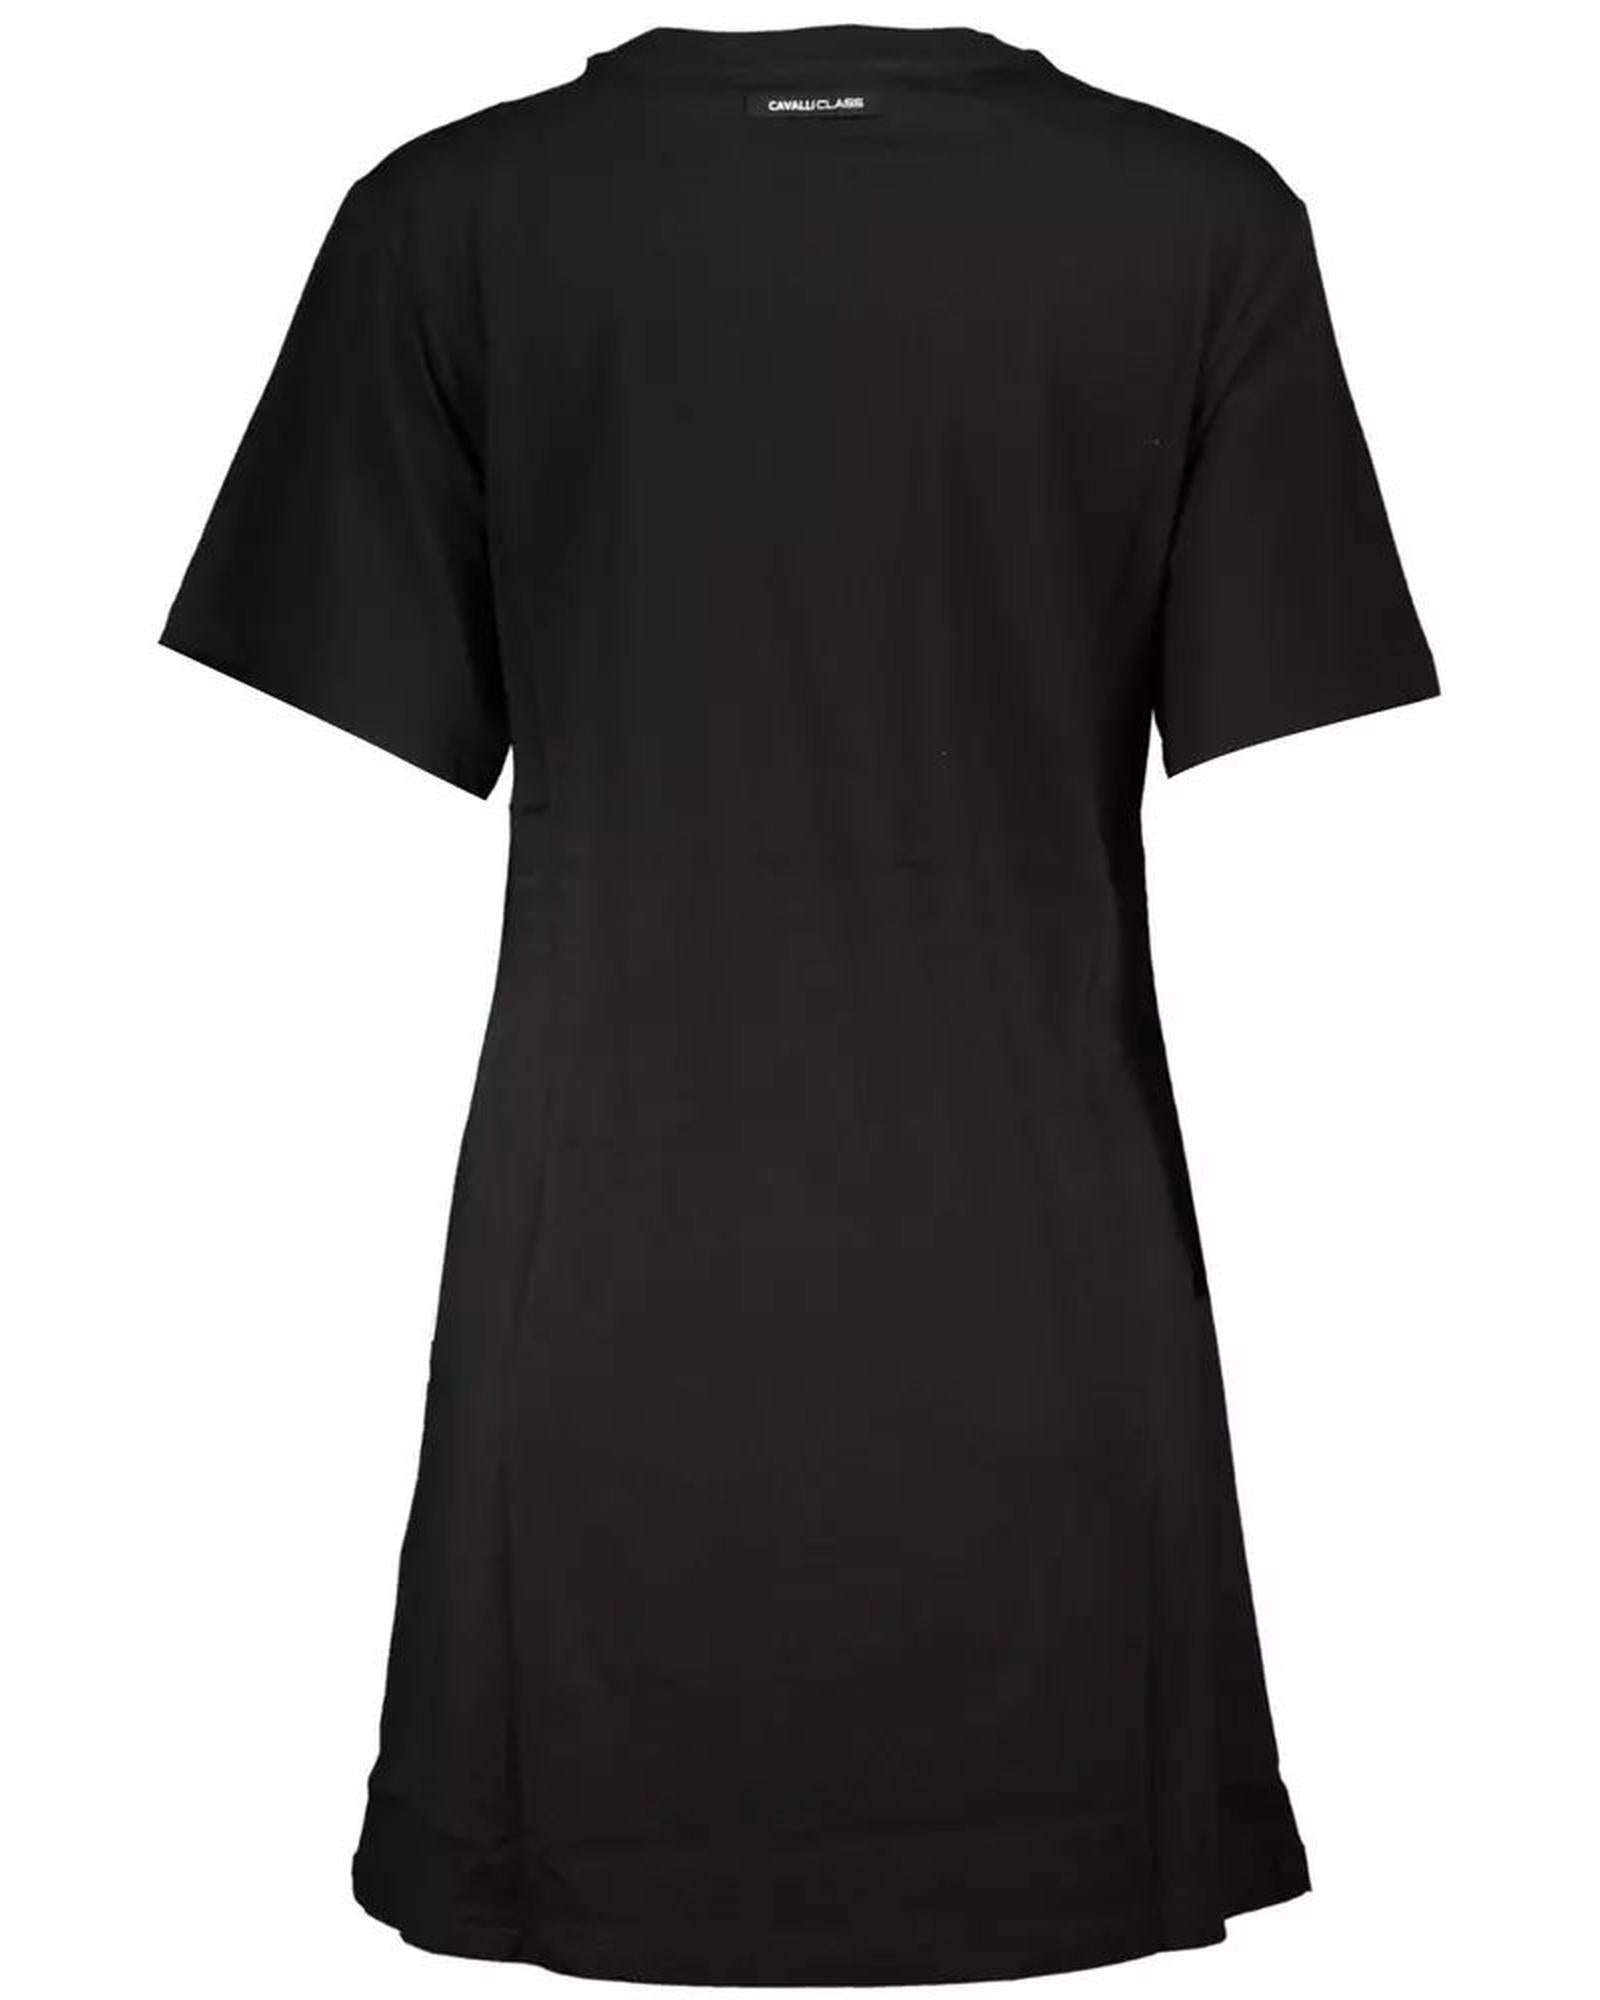 Women's Black Cotton Dress - S